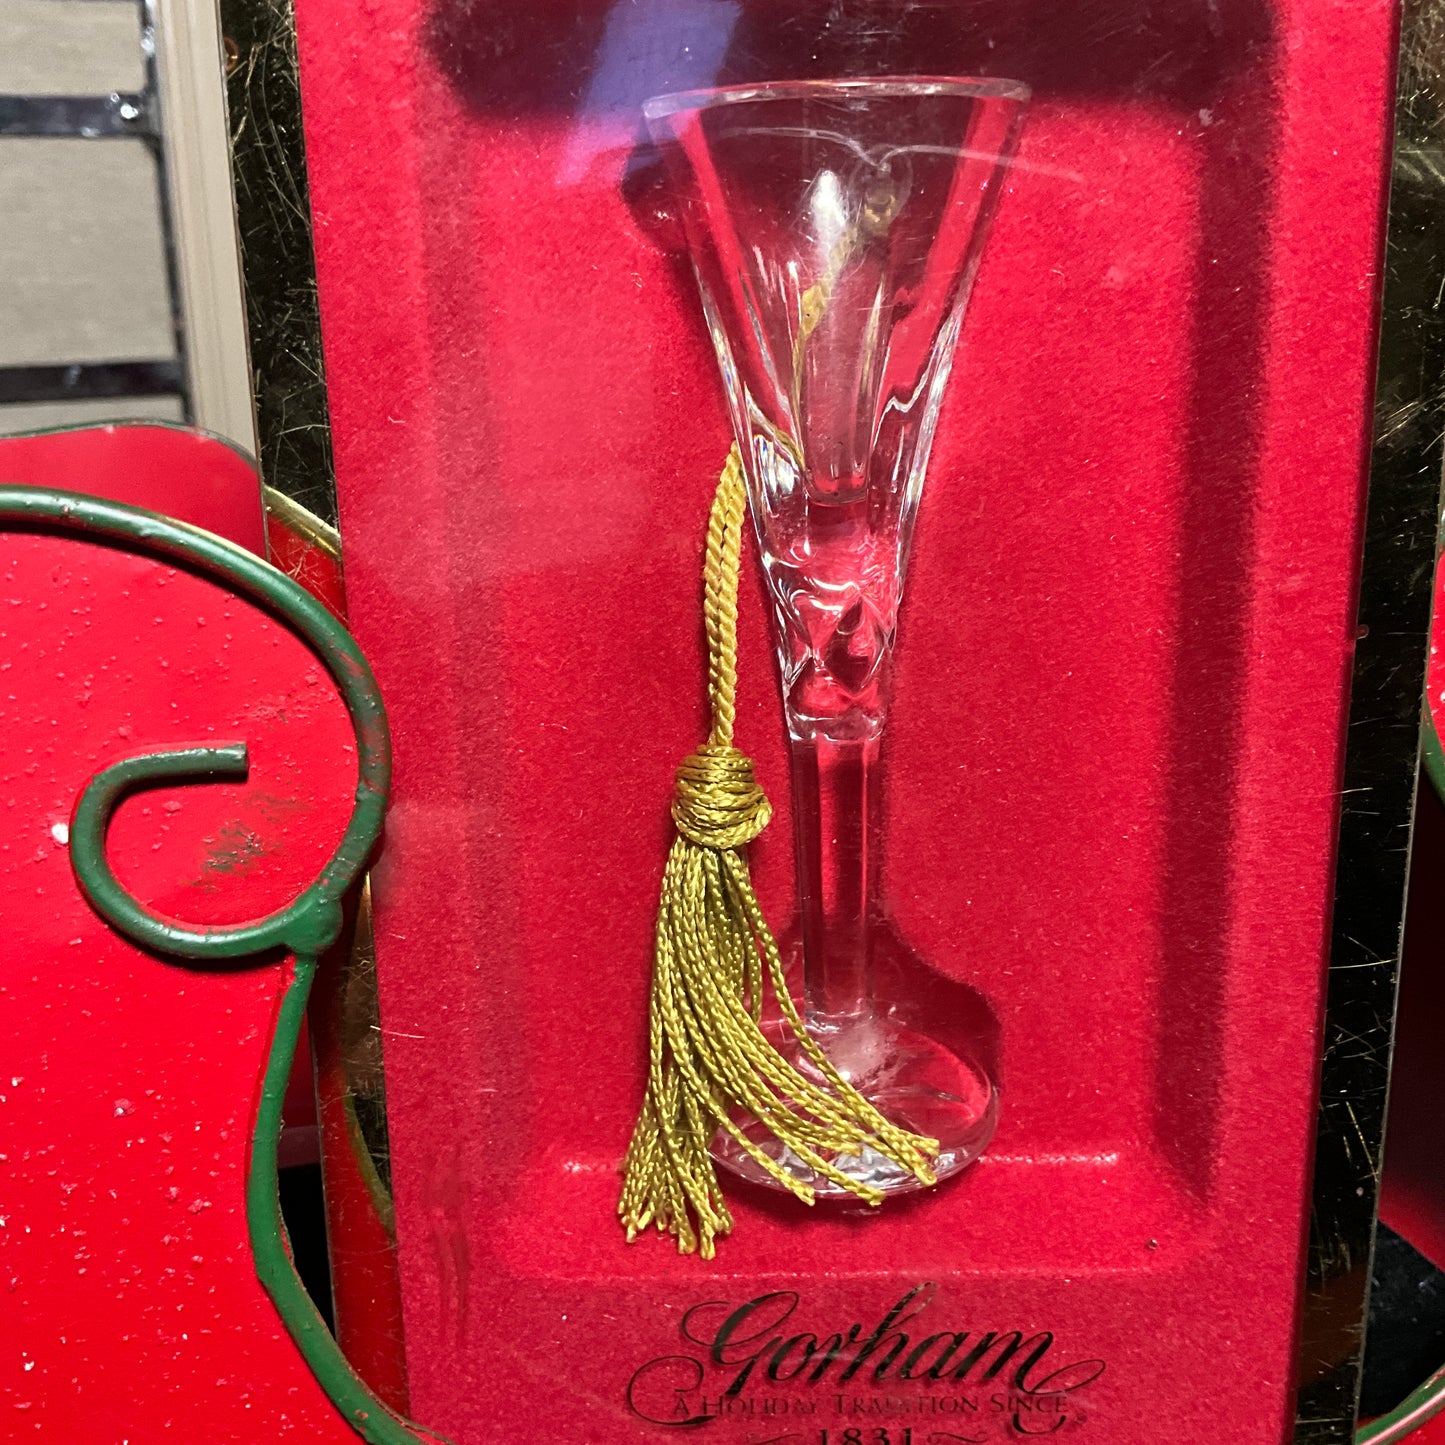 Gorham crystal & gold champagne flute Christmas ornament